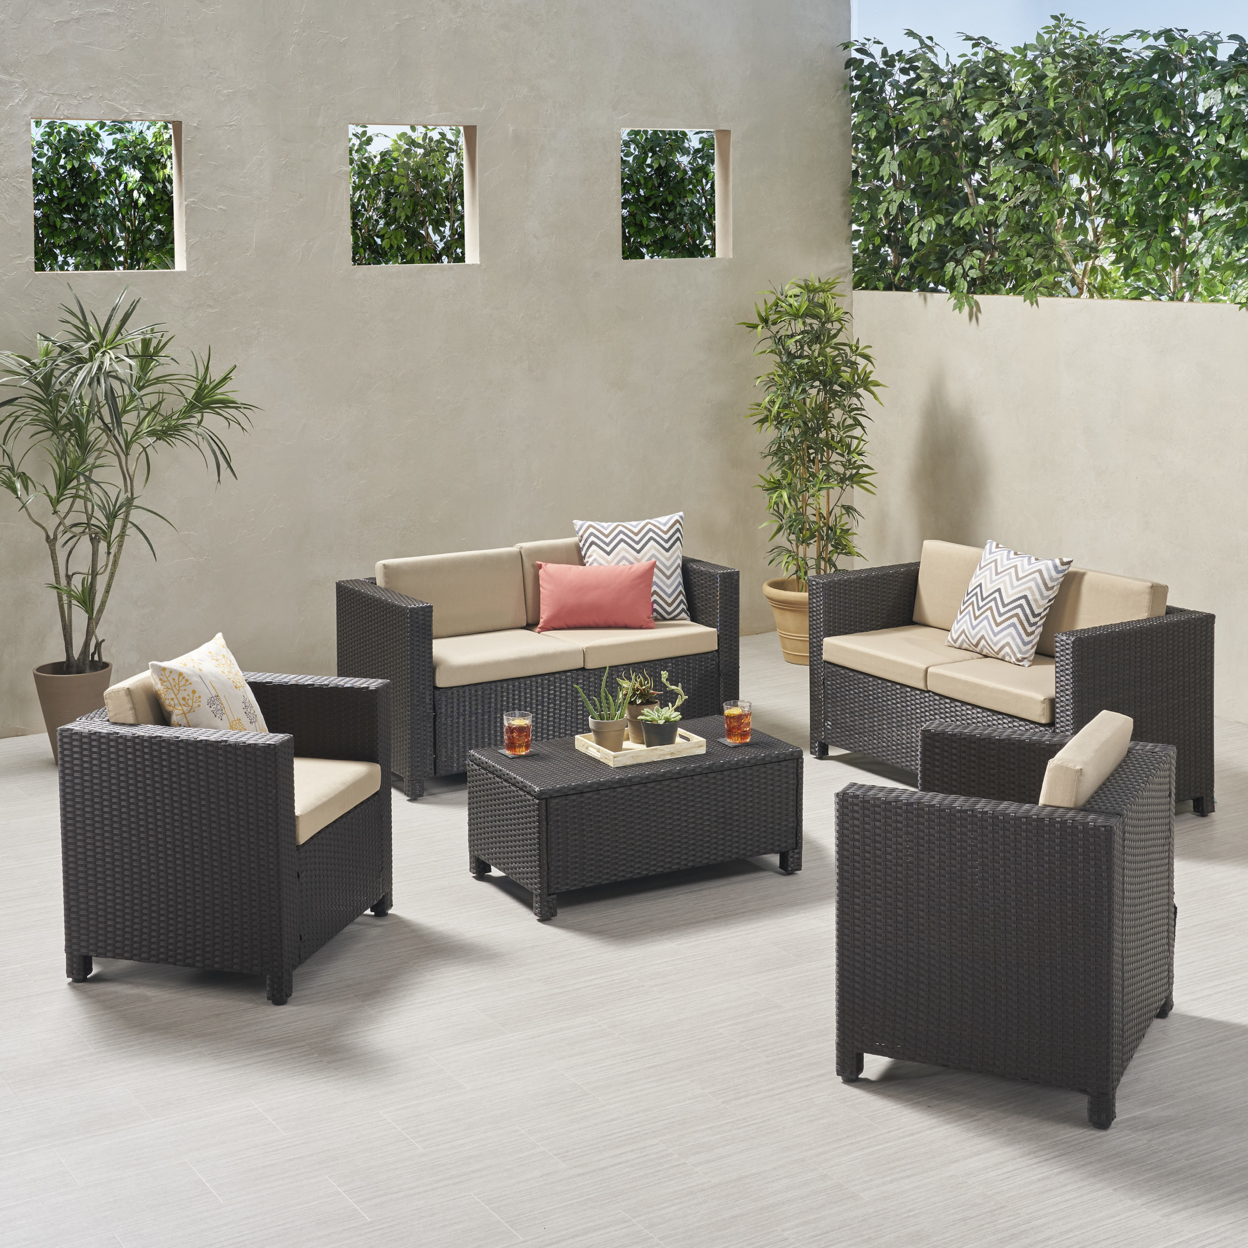 Doreen Outdoor 6 Seater Loveseat Chat Set With Cushions - Dark Brown + Beige